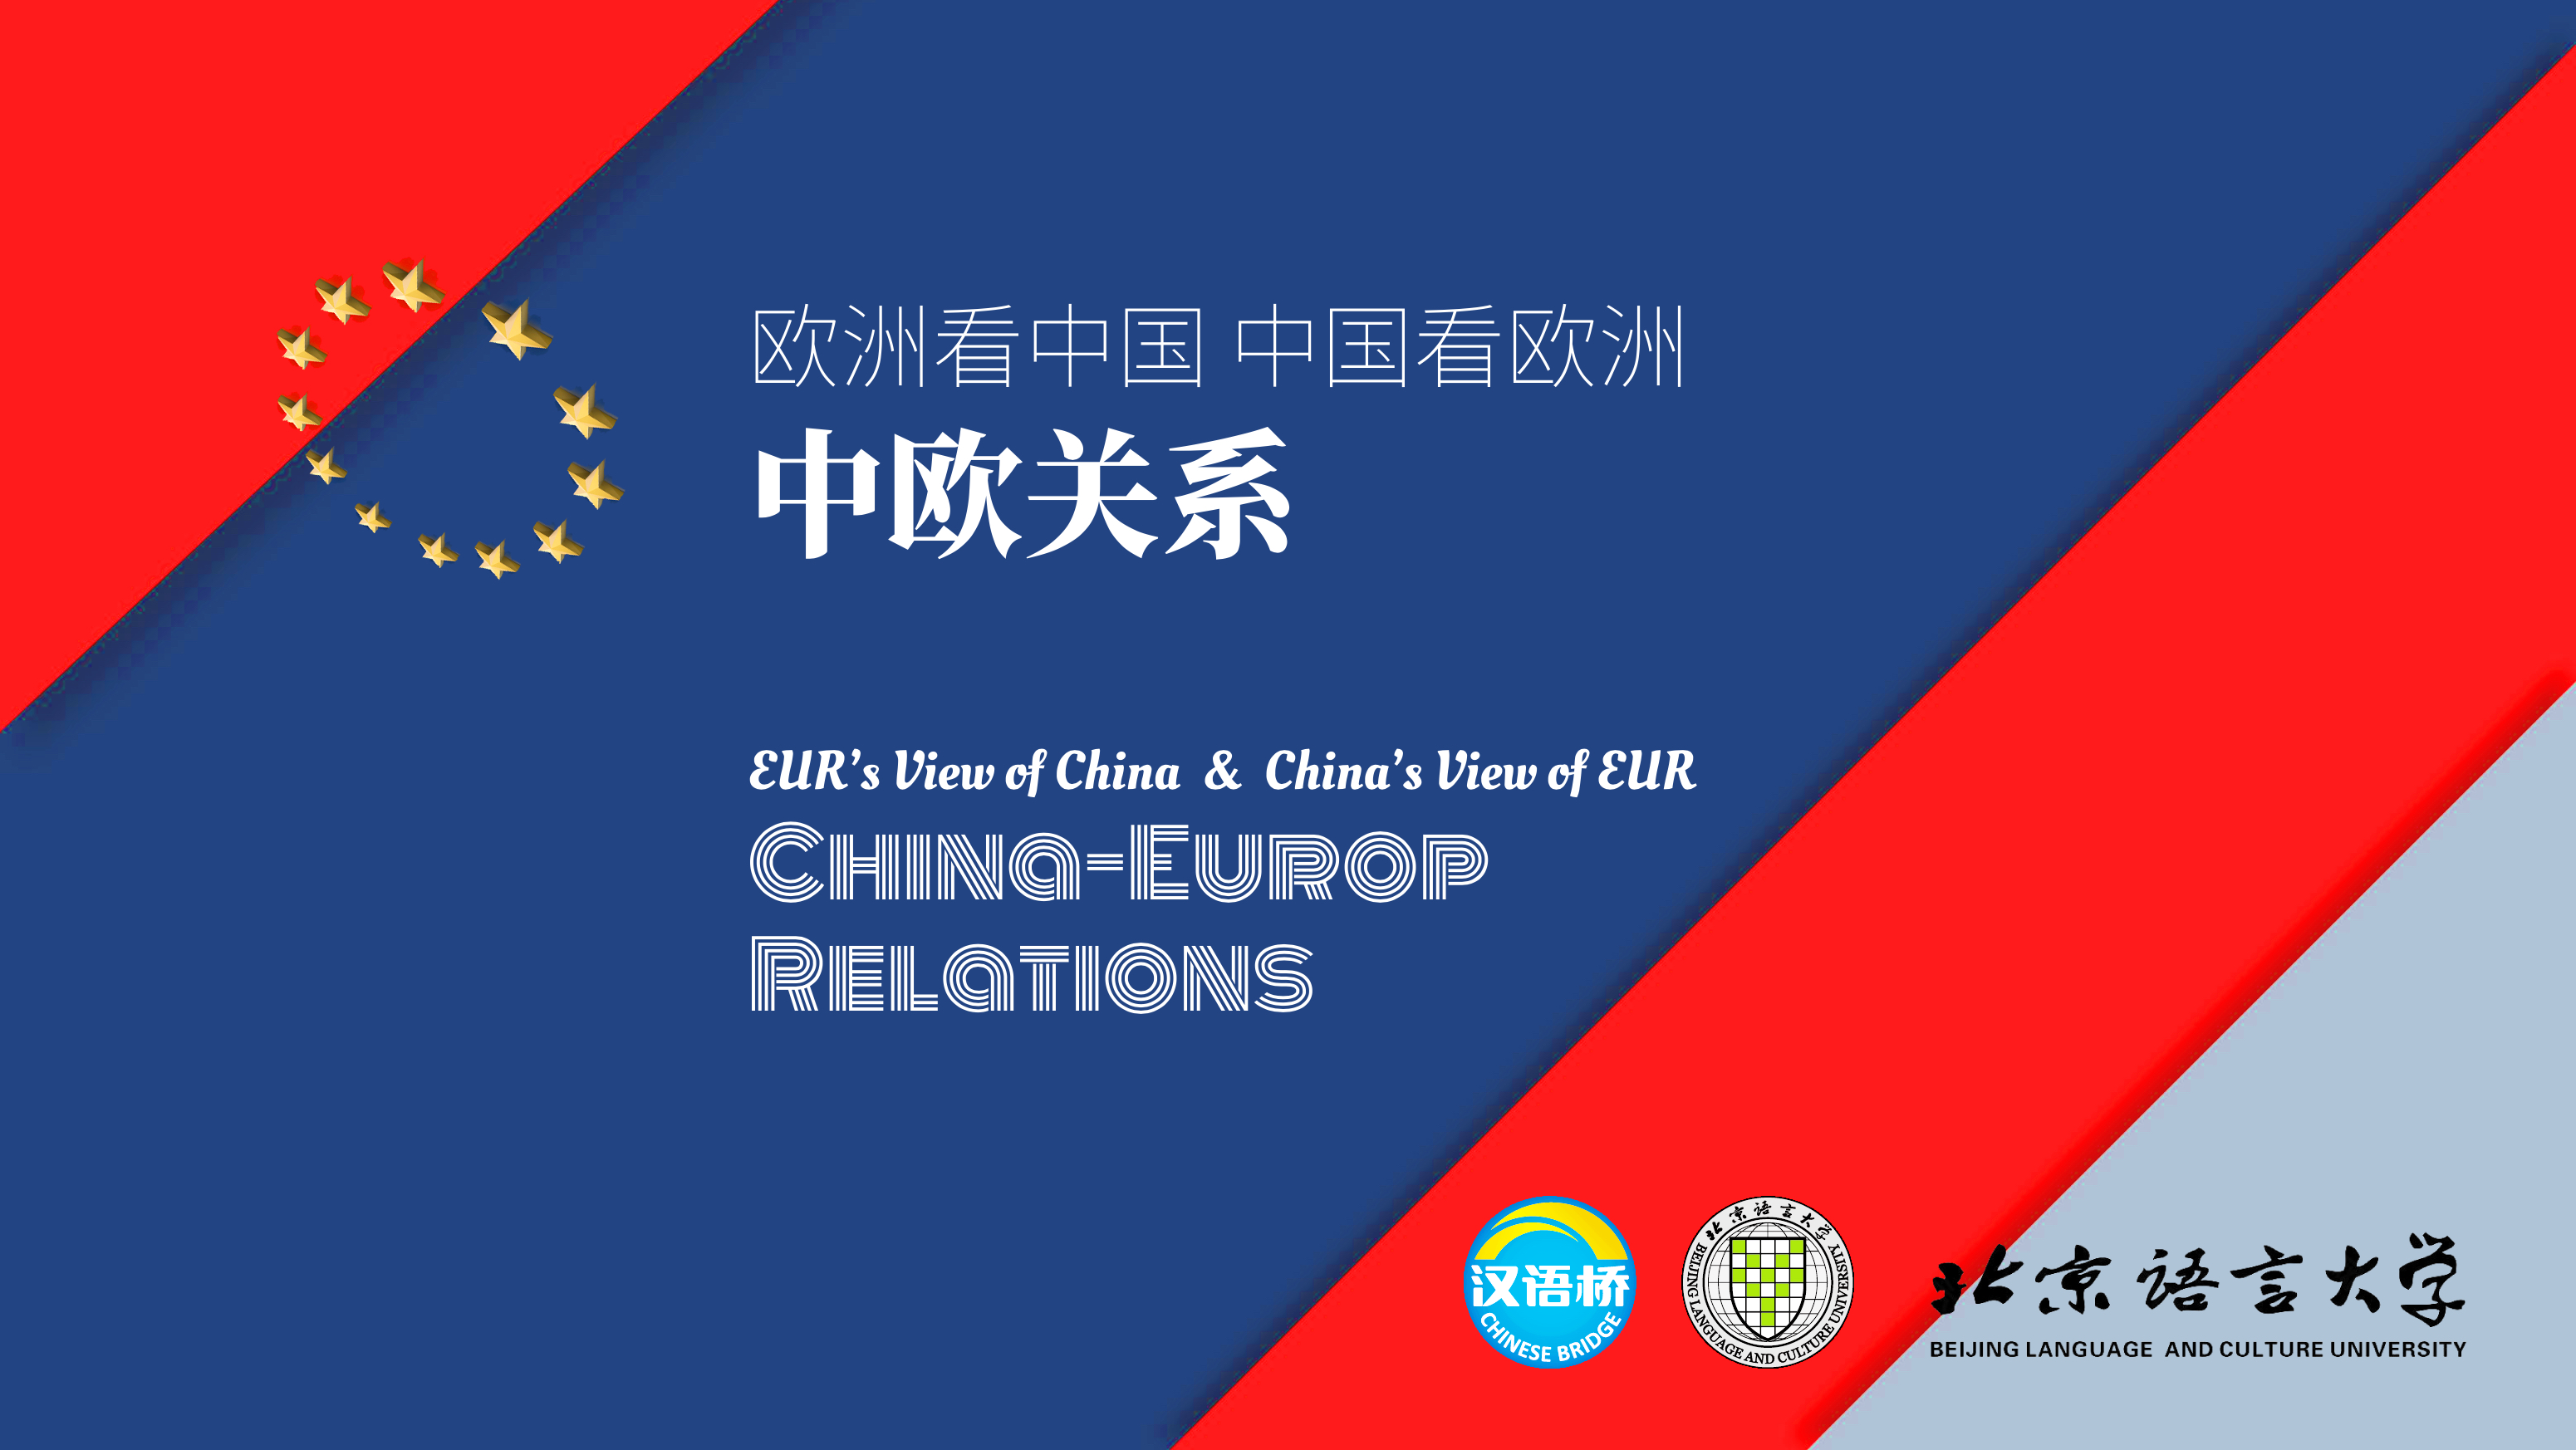 China—Europ Relations